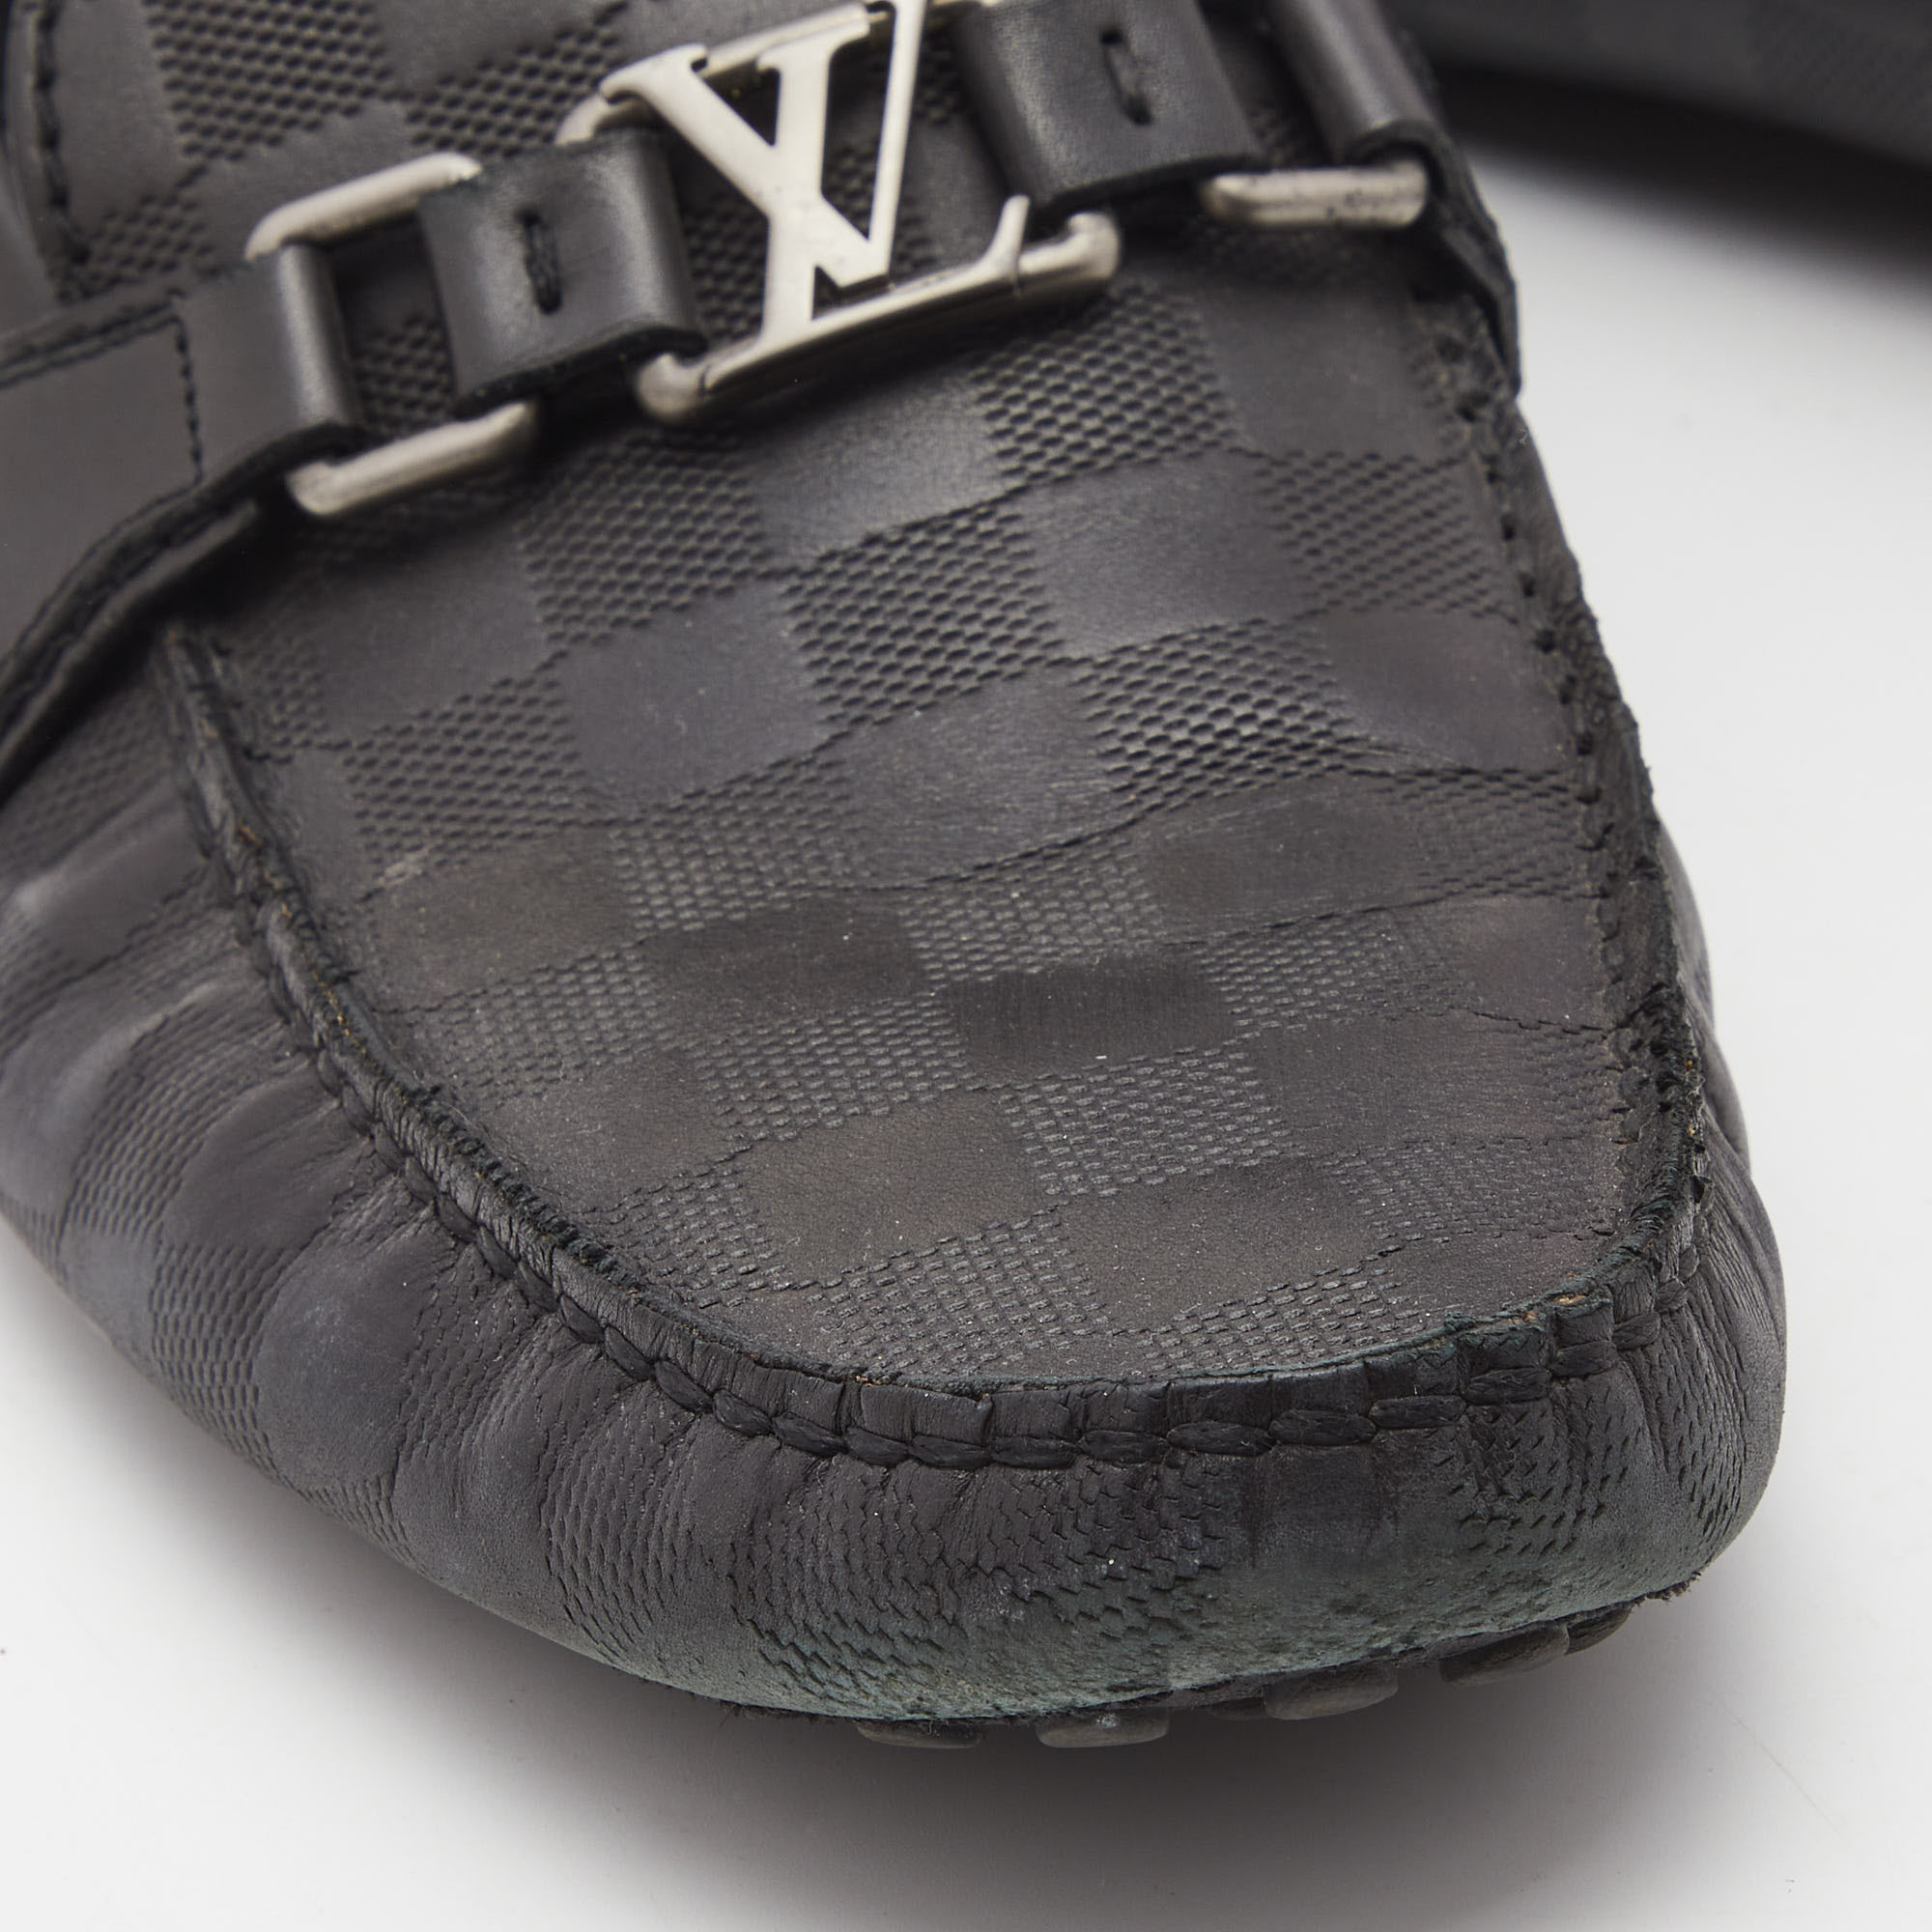 Louis Vuitton Black Leather Hockenheim Loafers Size 43